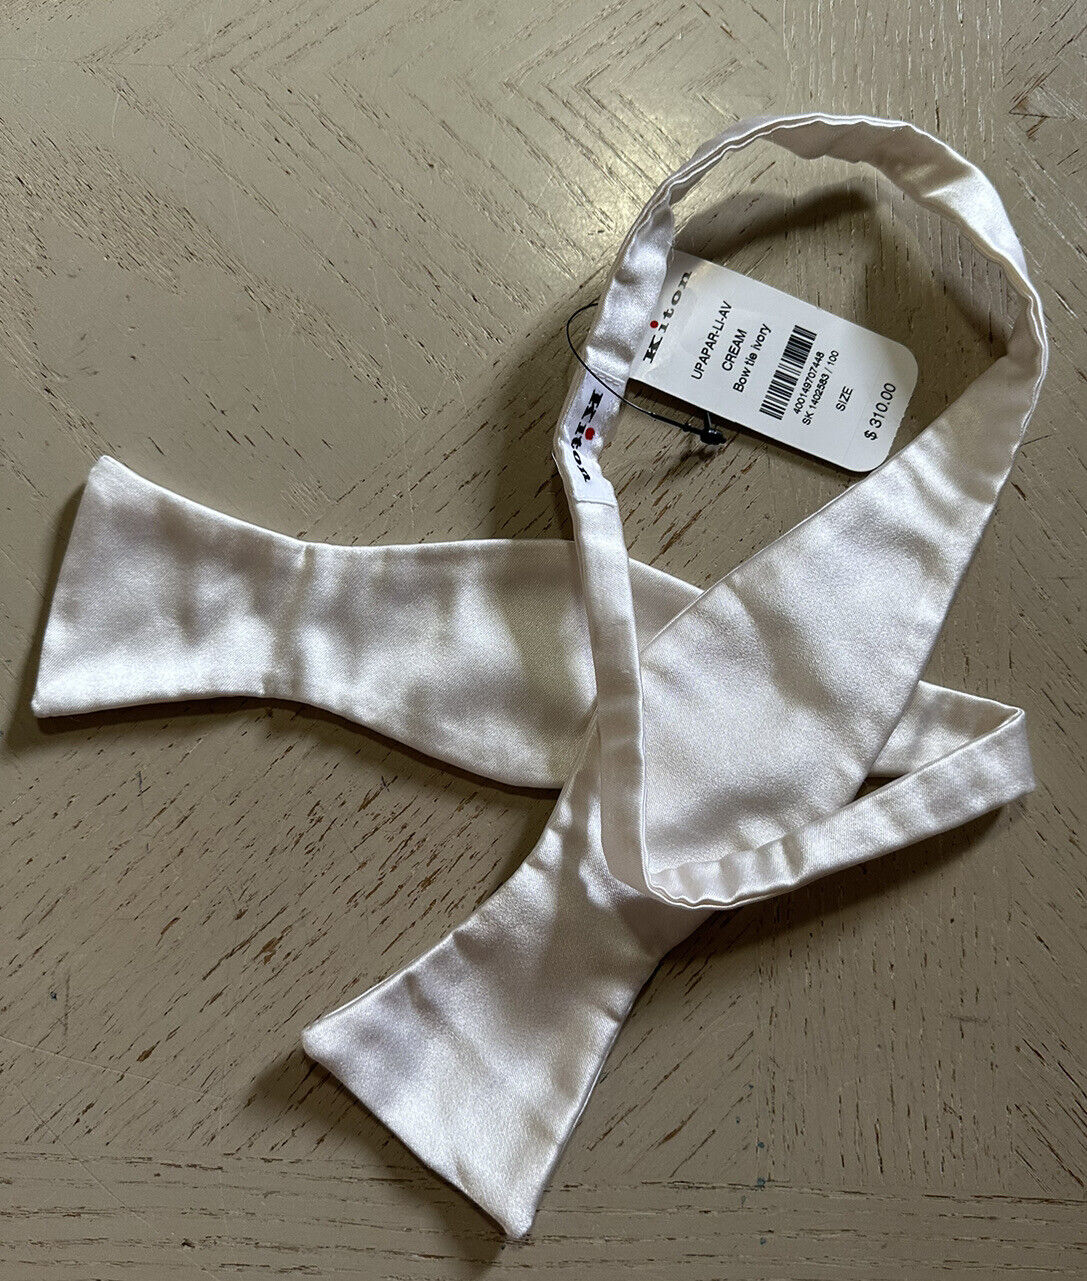 New $310 Kiton Silk Bow Tie Ivory Hand nade in Italy